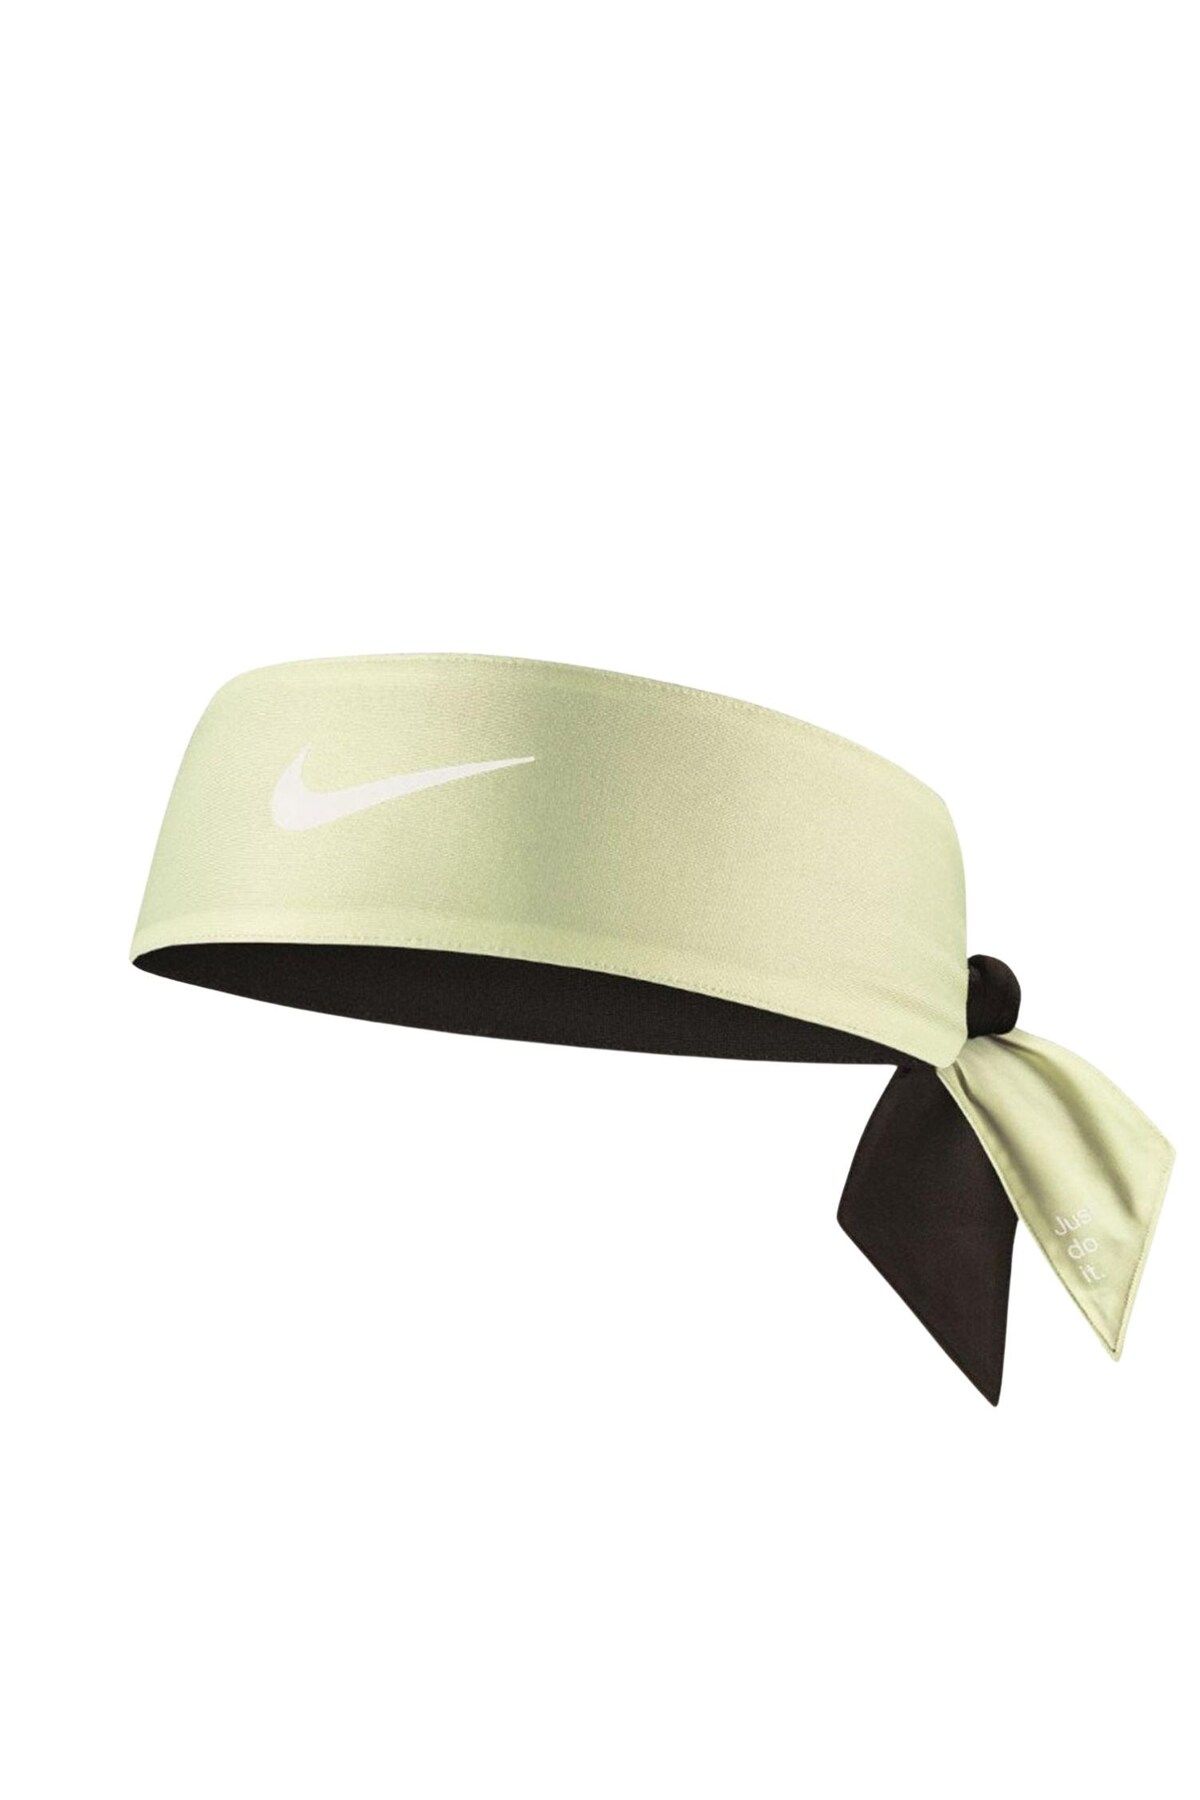 Nike Dri-fit Head Tie 2.0 Antrenman Çok Renkli Saç Bandı